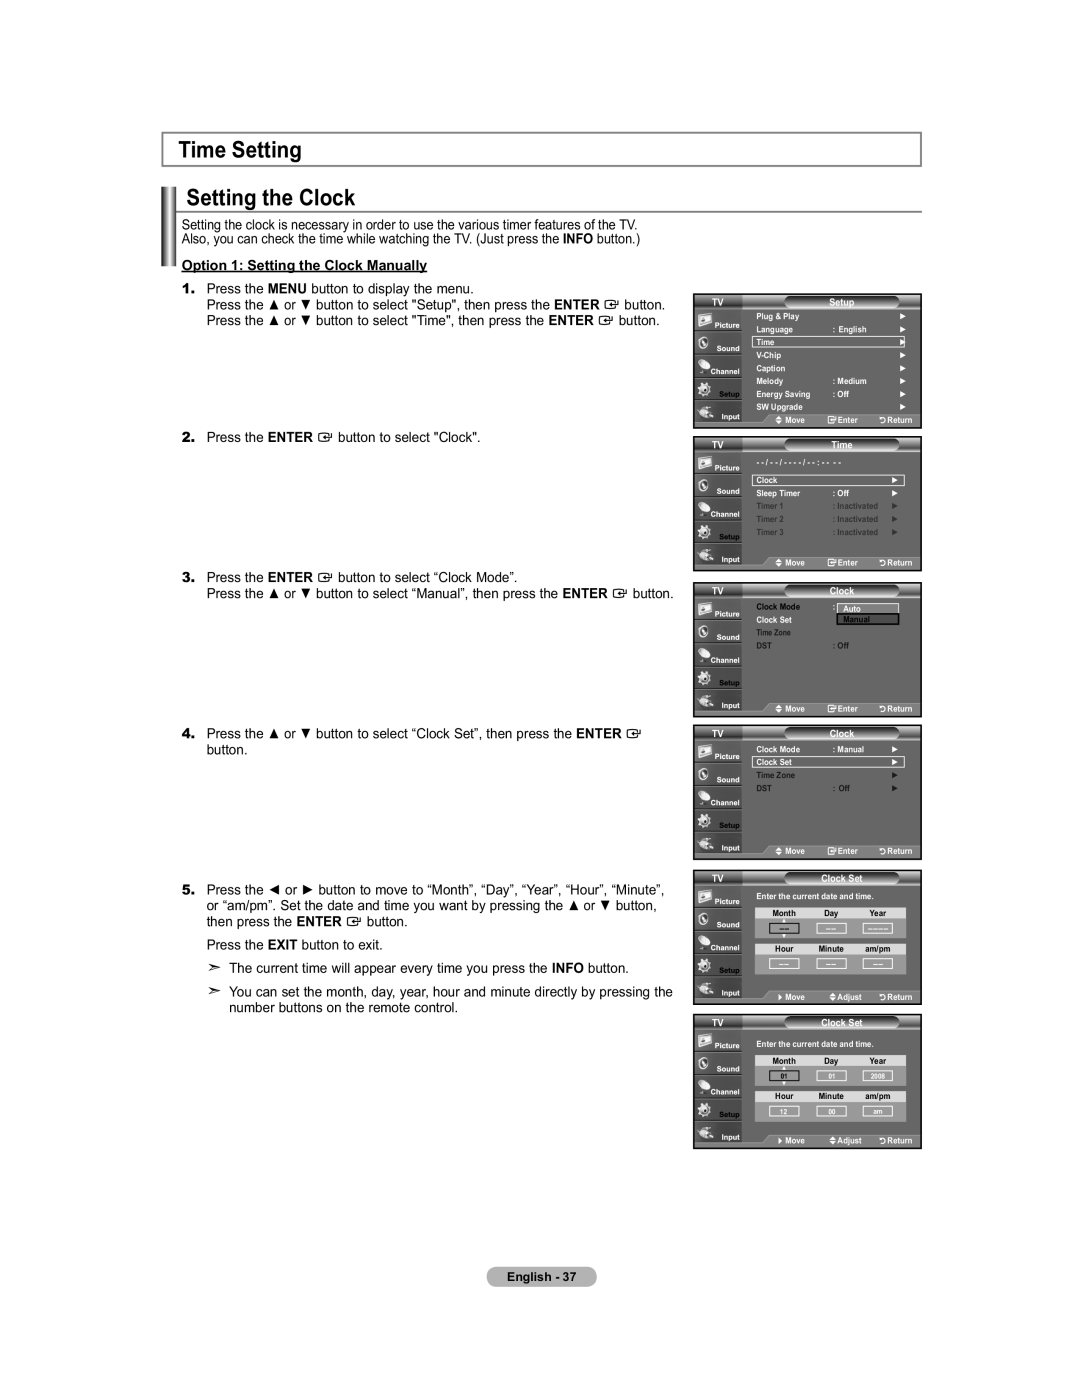 Samsung 451 user manual Time Setting Setting the Clock, Option 1 Setting the Clock Manually, Press the 